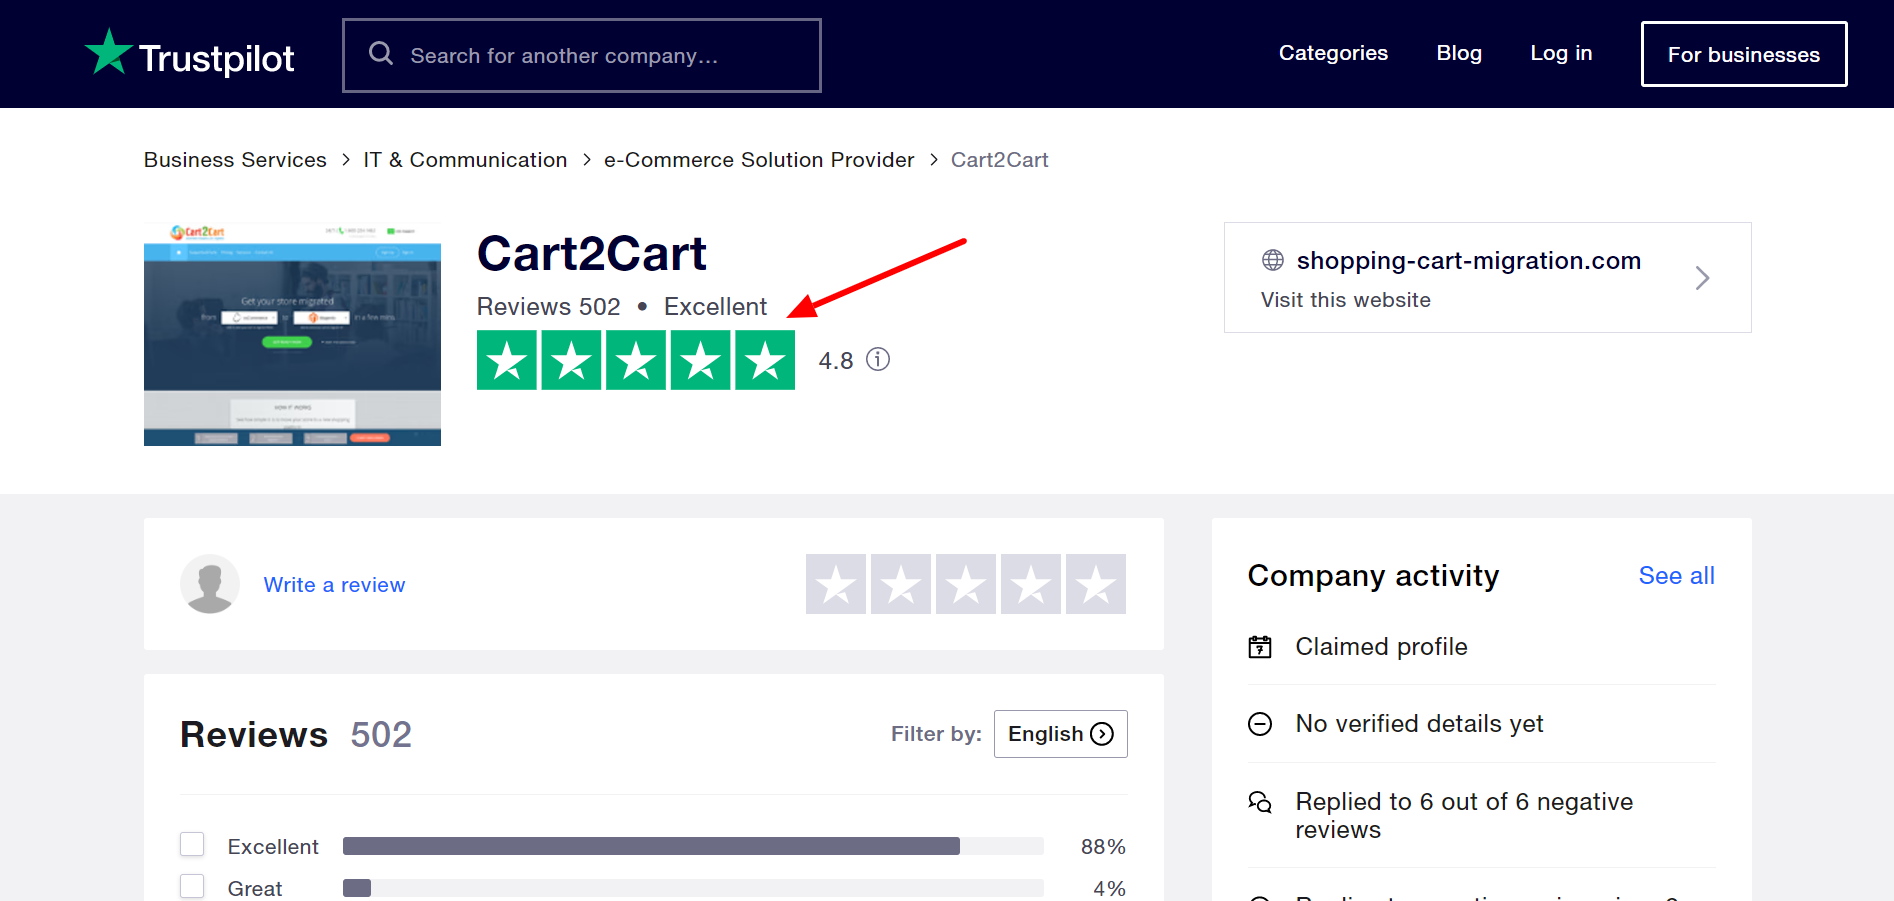 Cart2Cart Review on Trustpilot